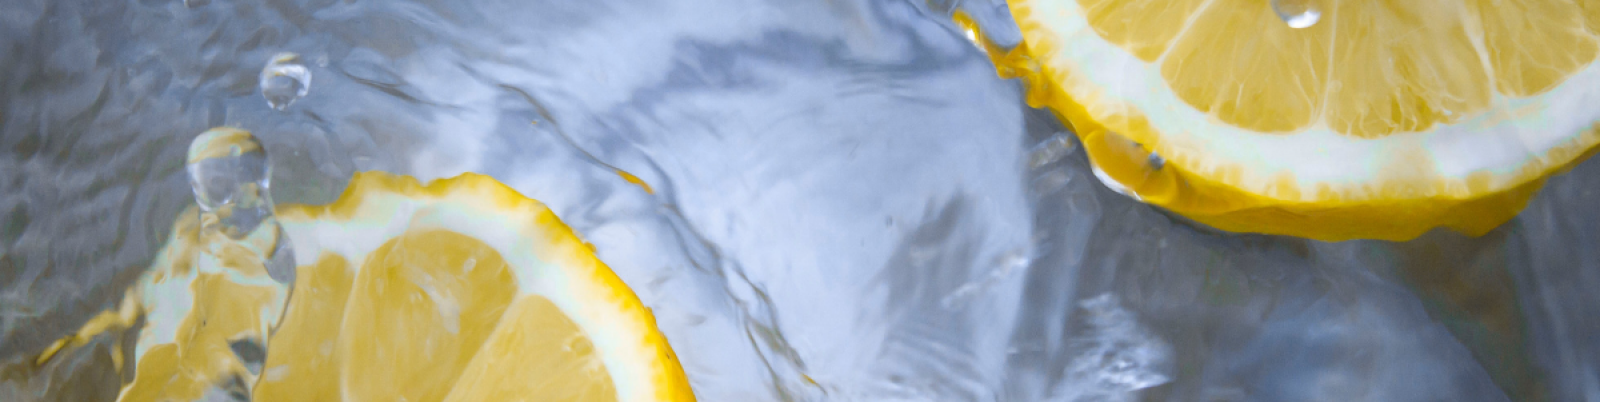 Fresh water with lemons